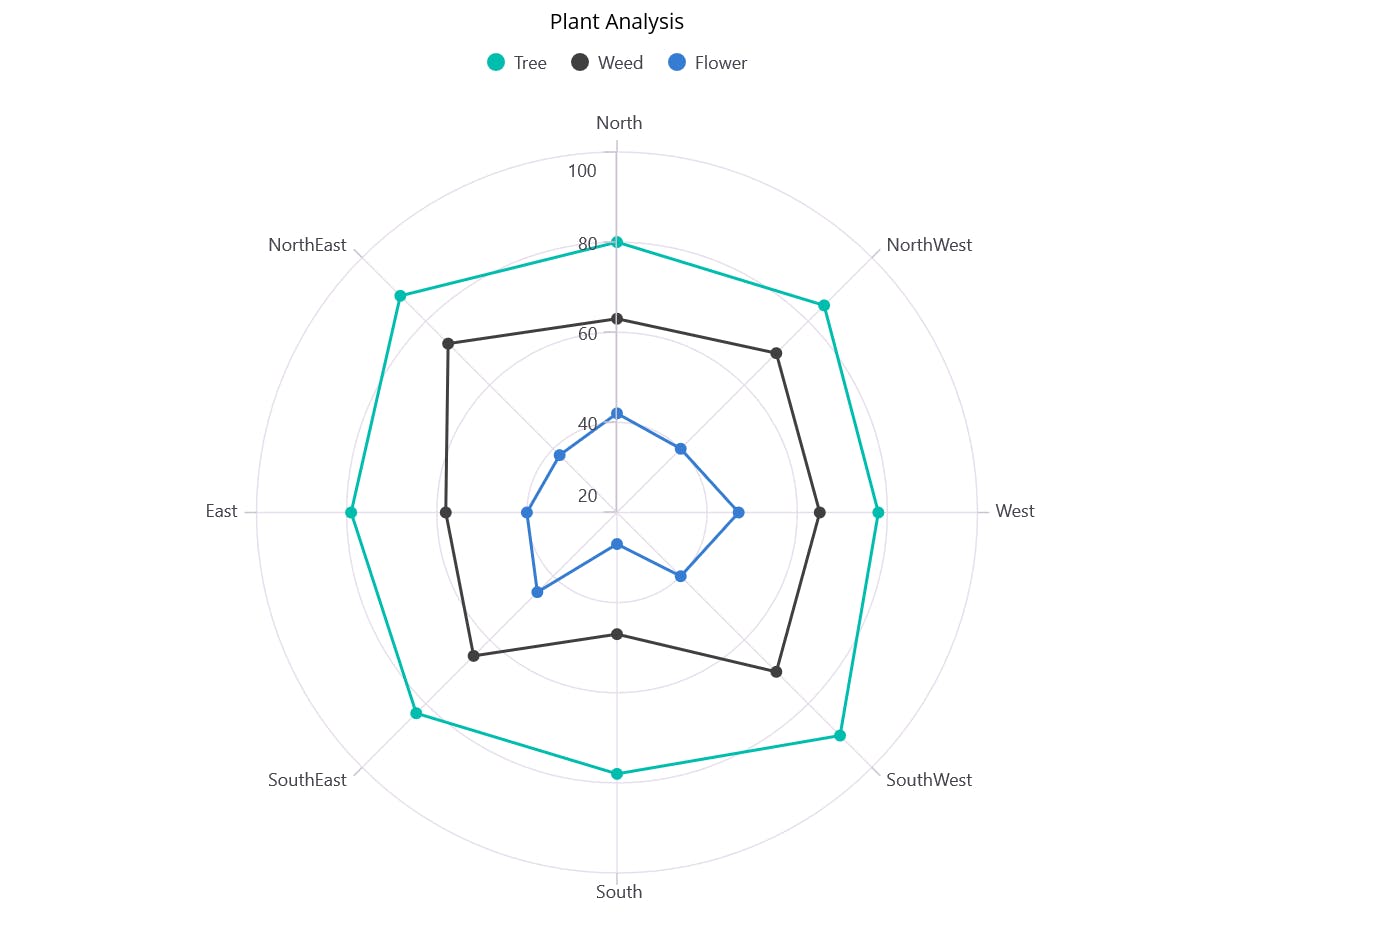 Visualizing data using the .NET MAUI Polar Charts control